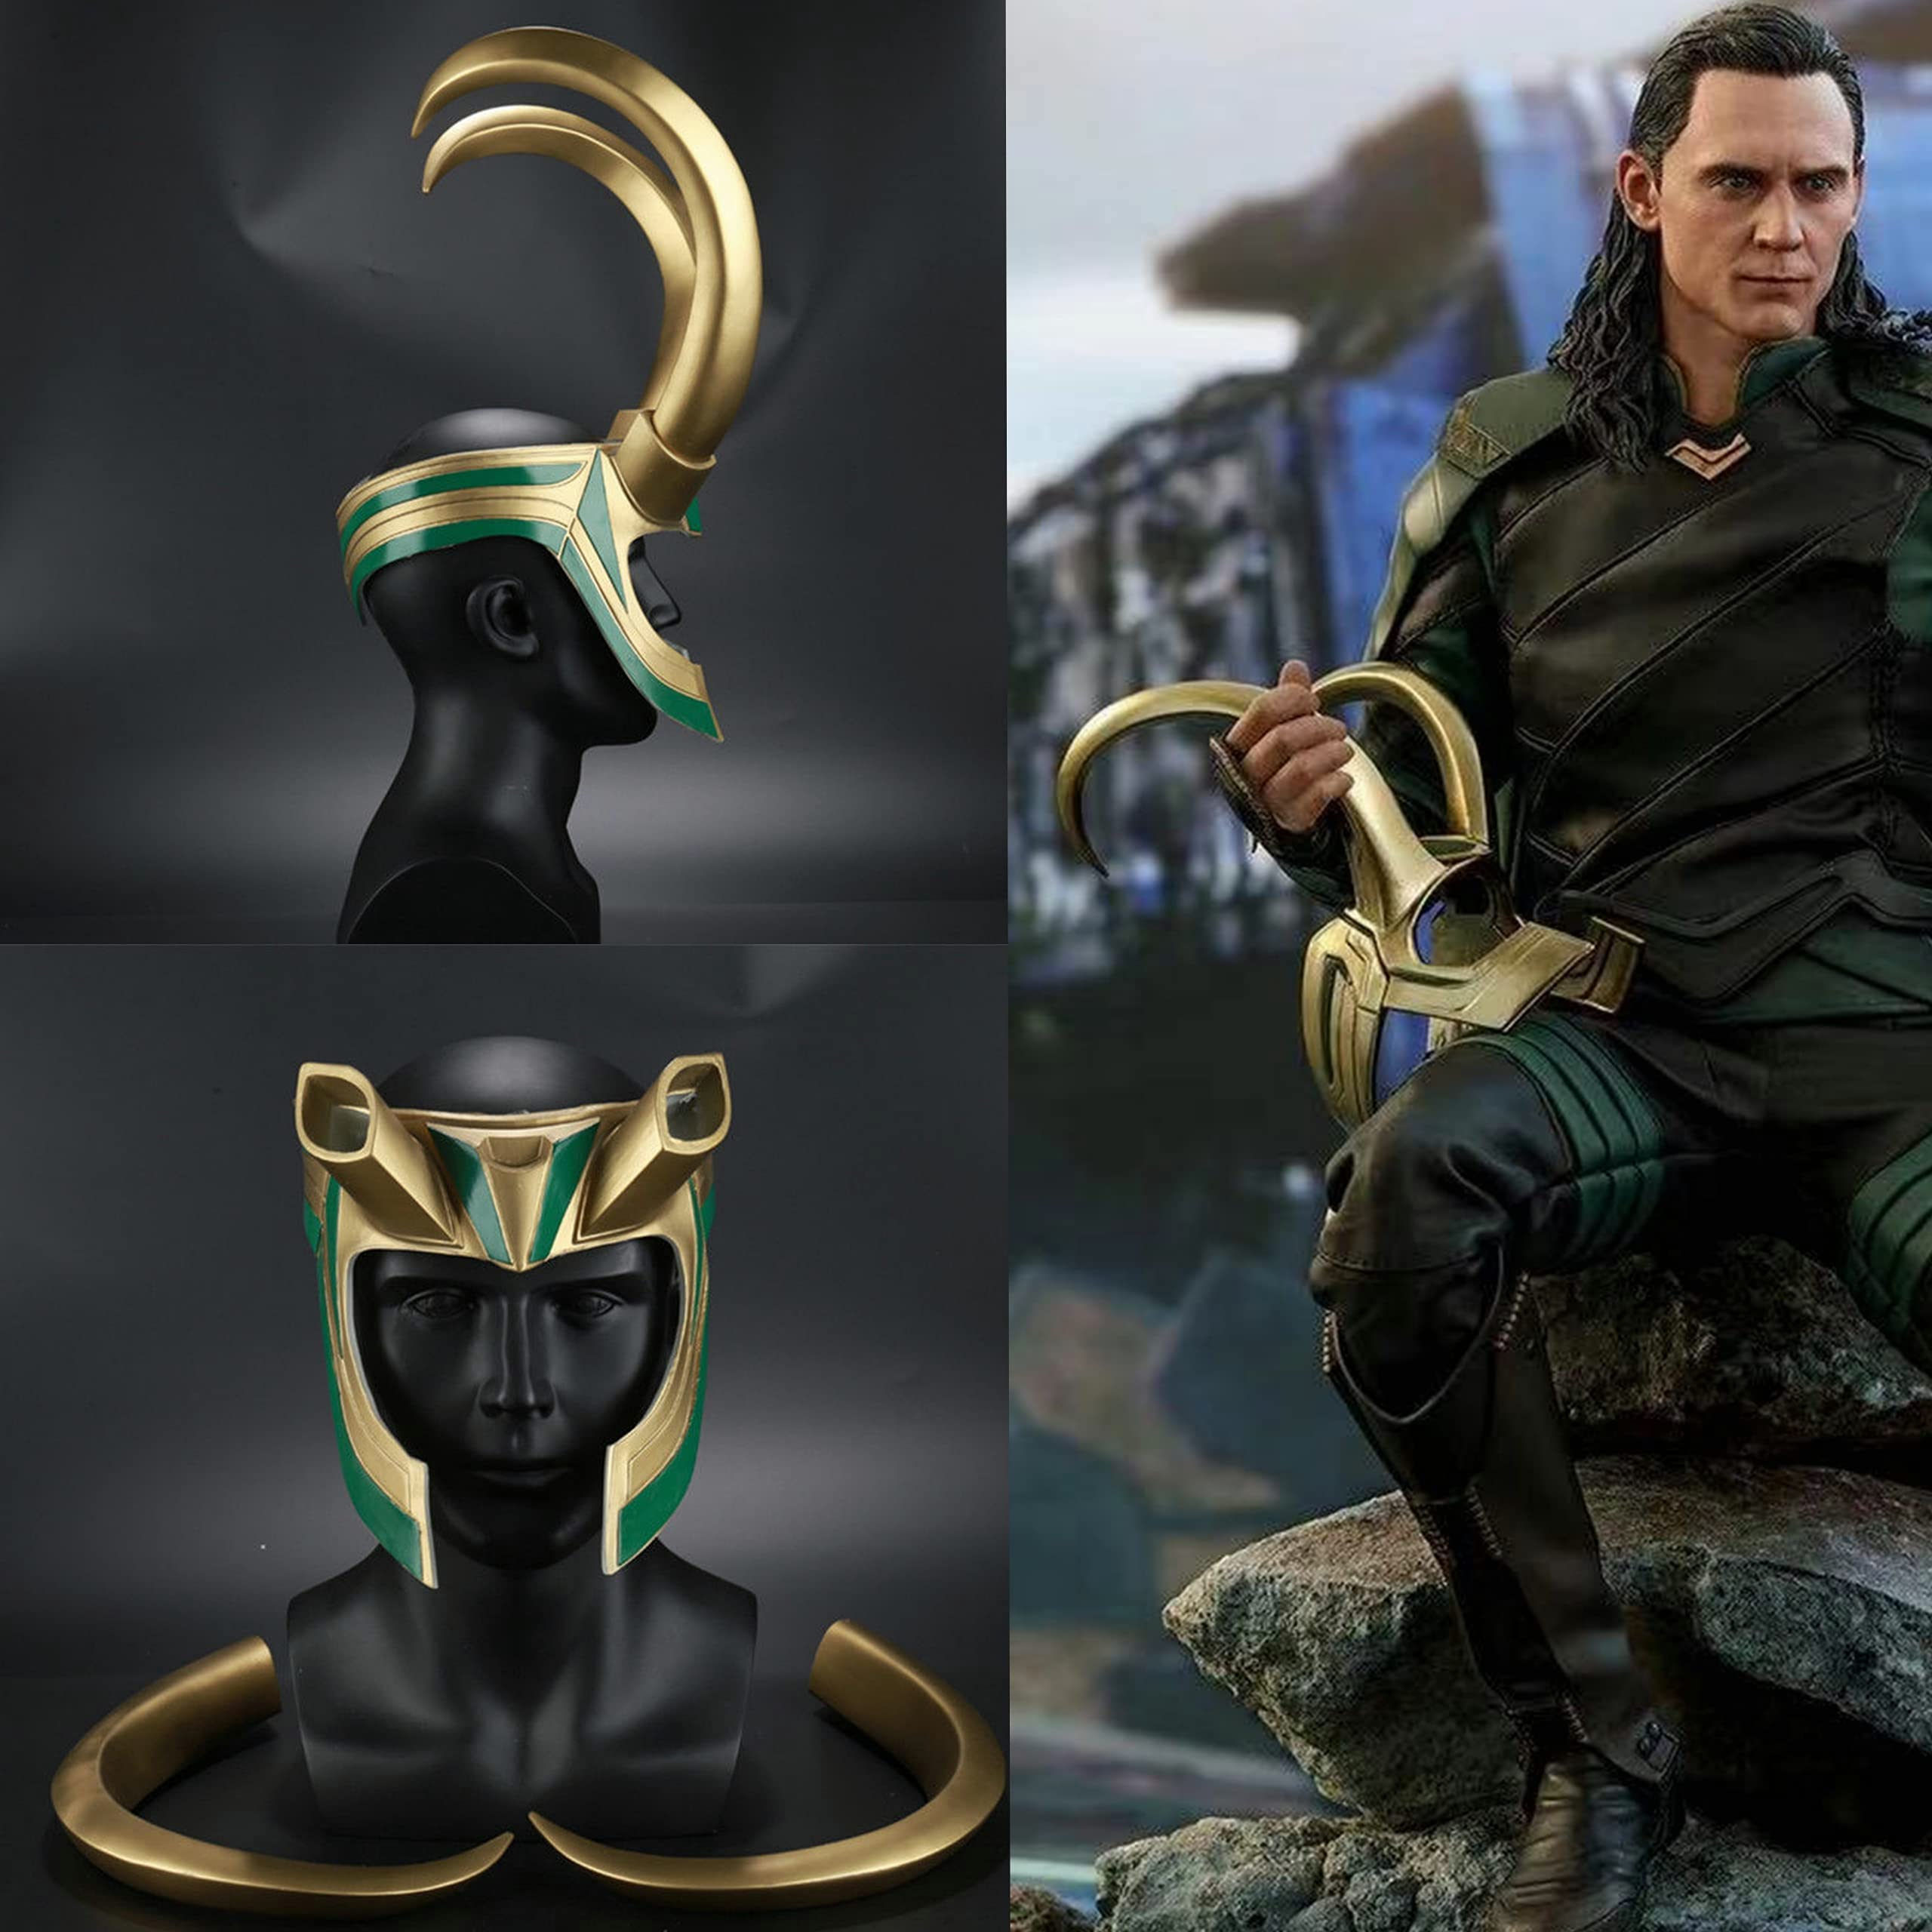 Superhero Helmet With Horns Movie Thor 3 Ragnarok Loki Laufeyson PVC Mask